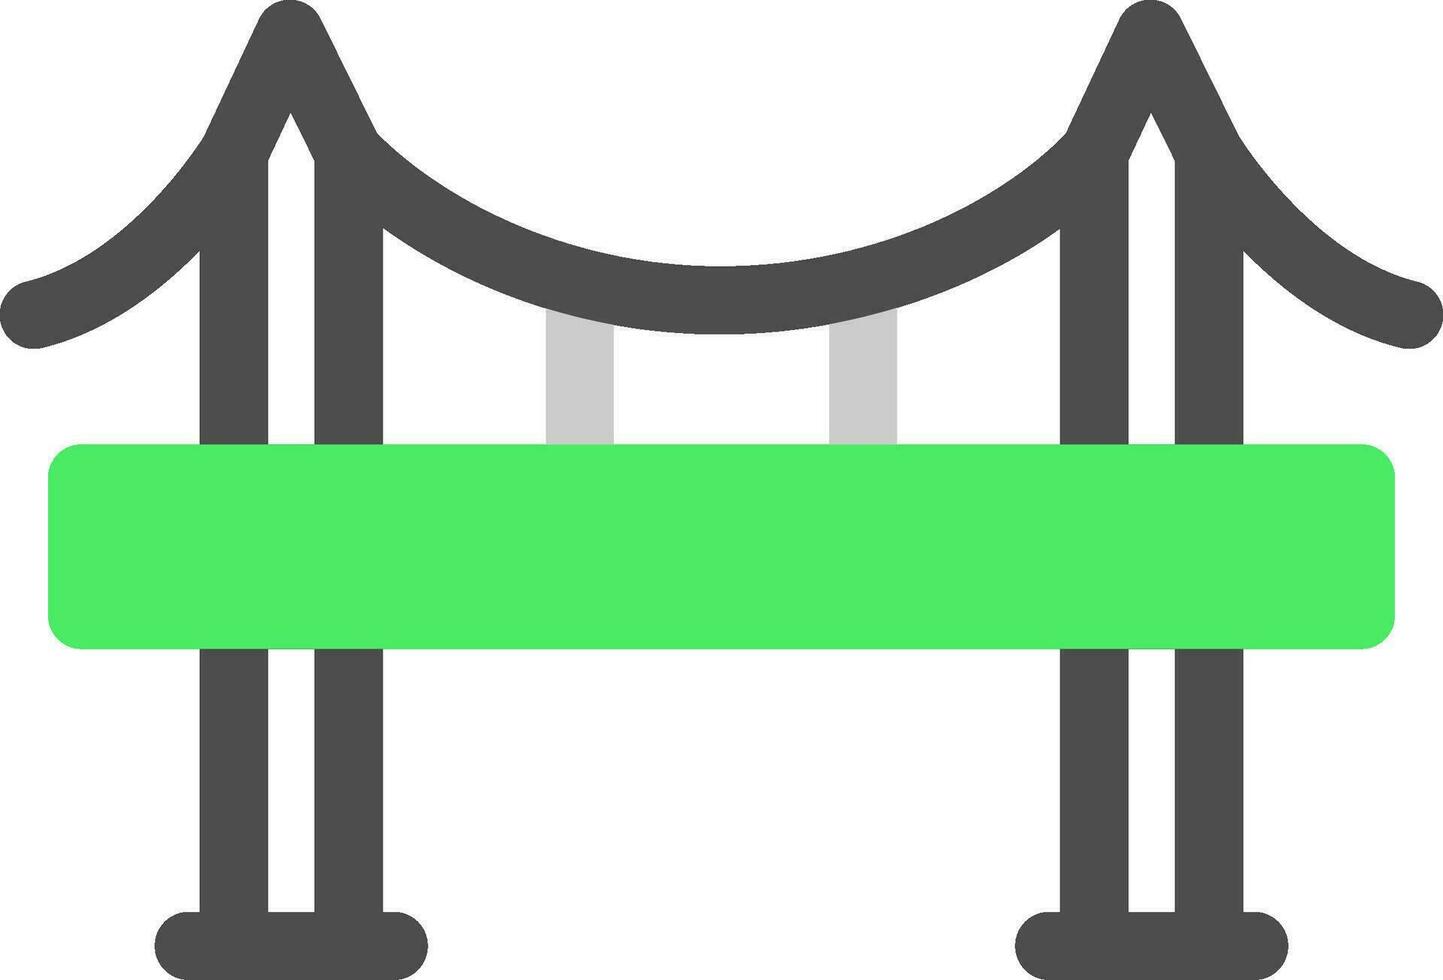 Bridge Creative Icon Design vector